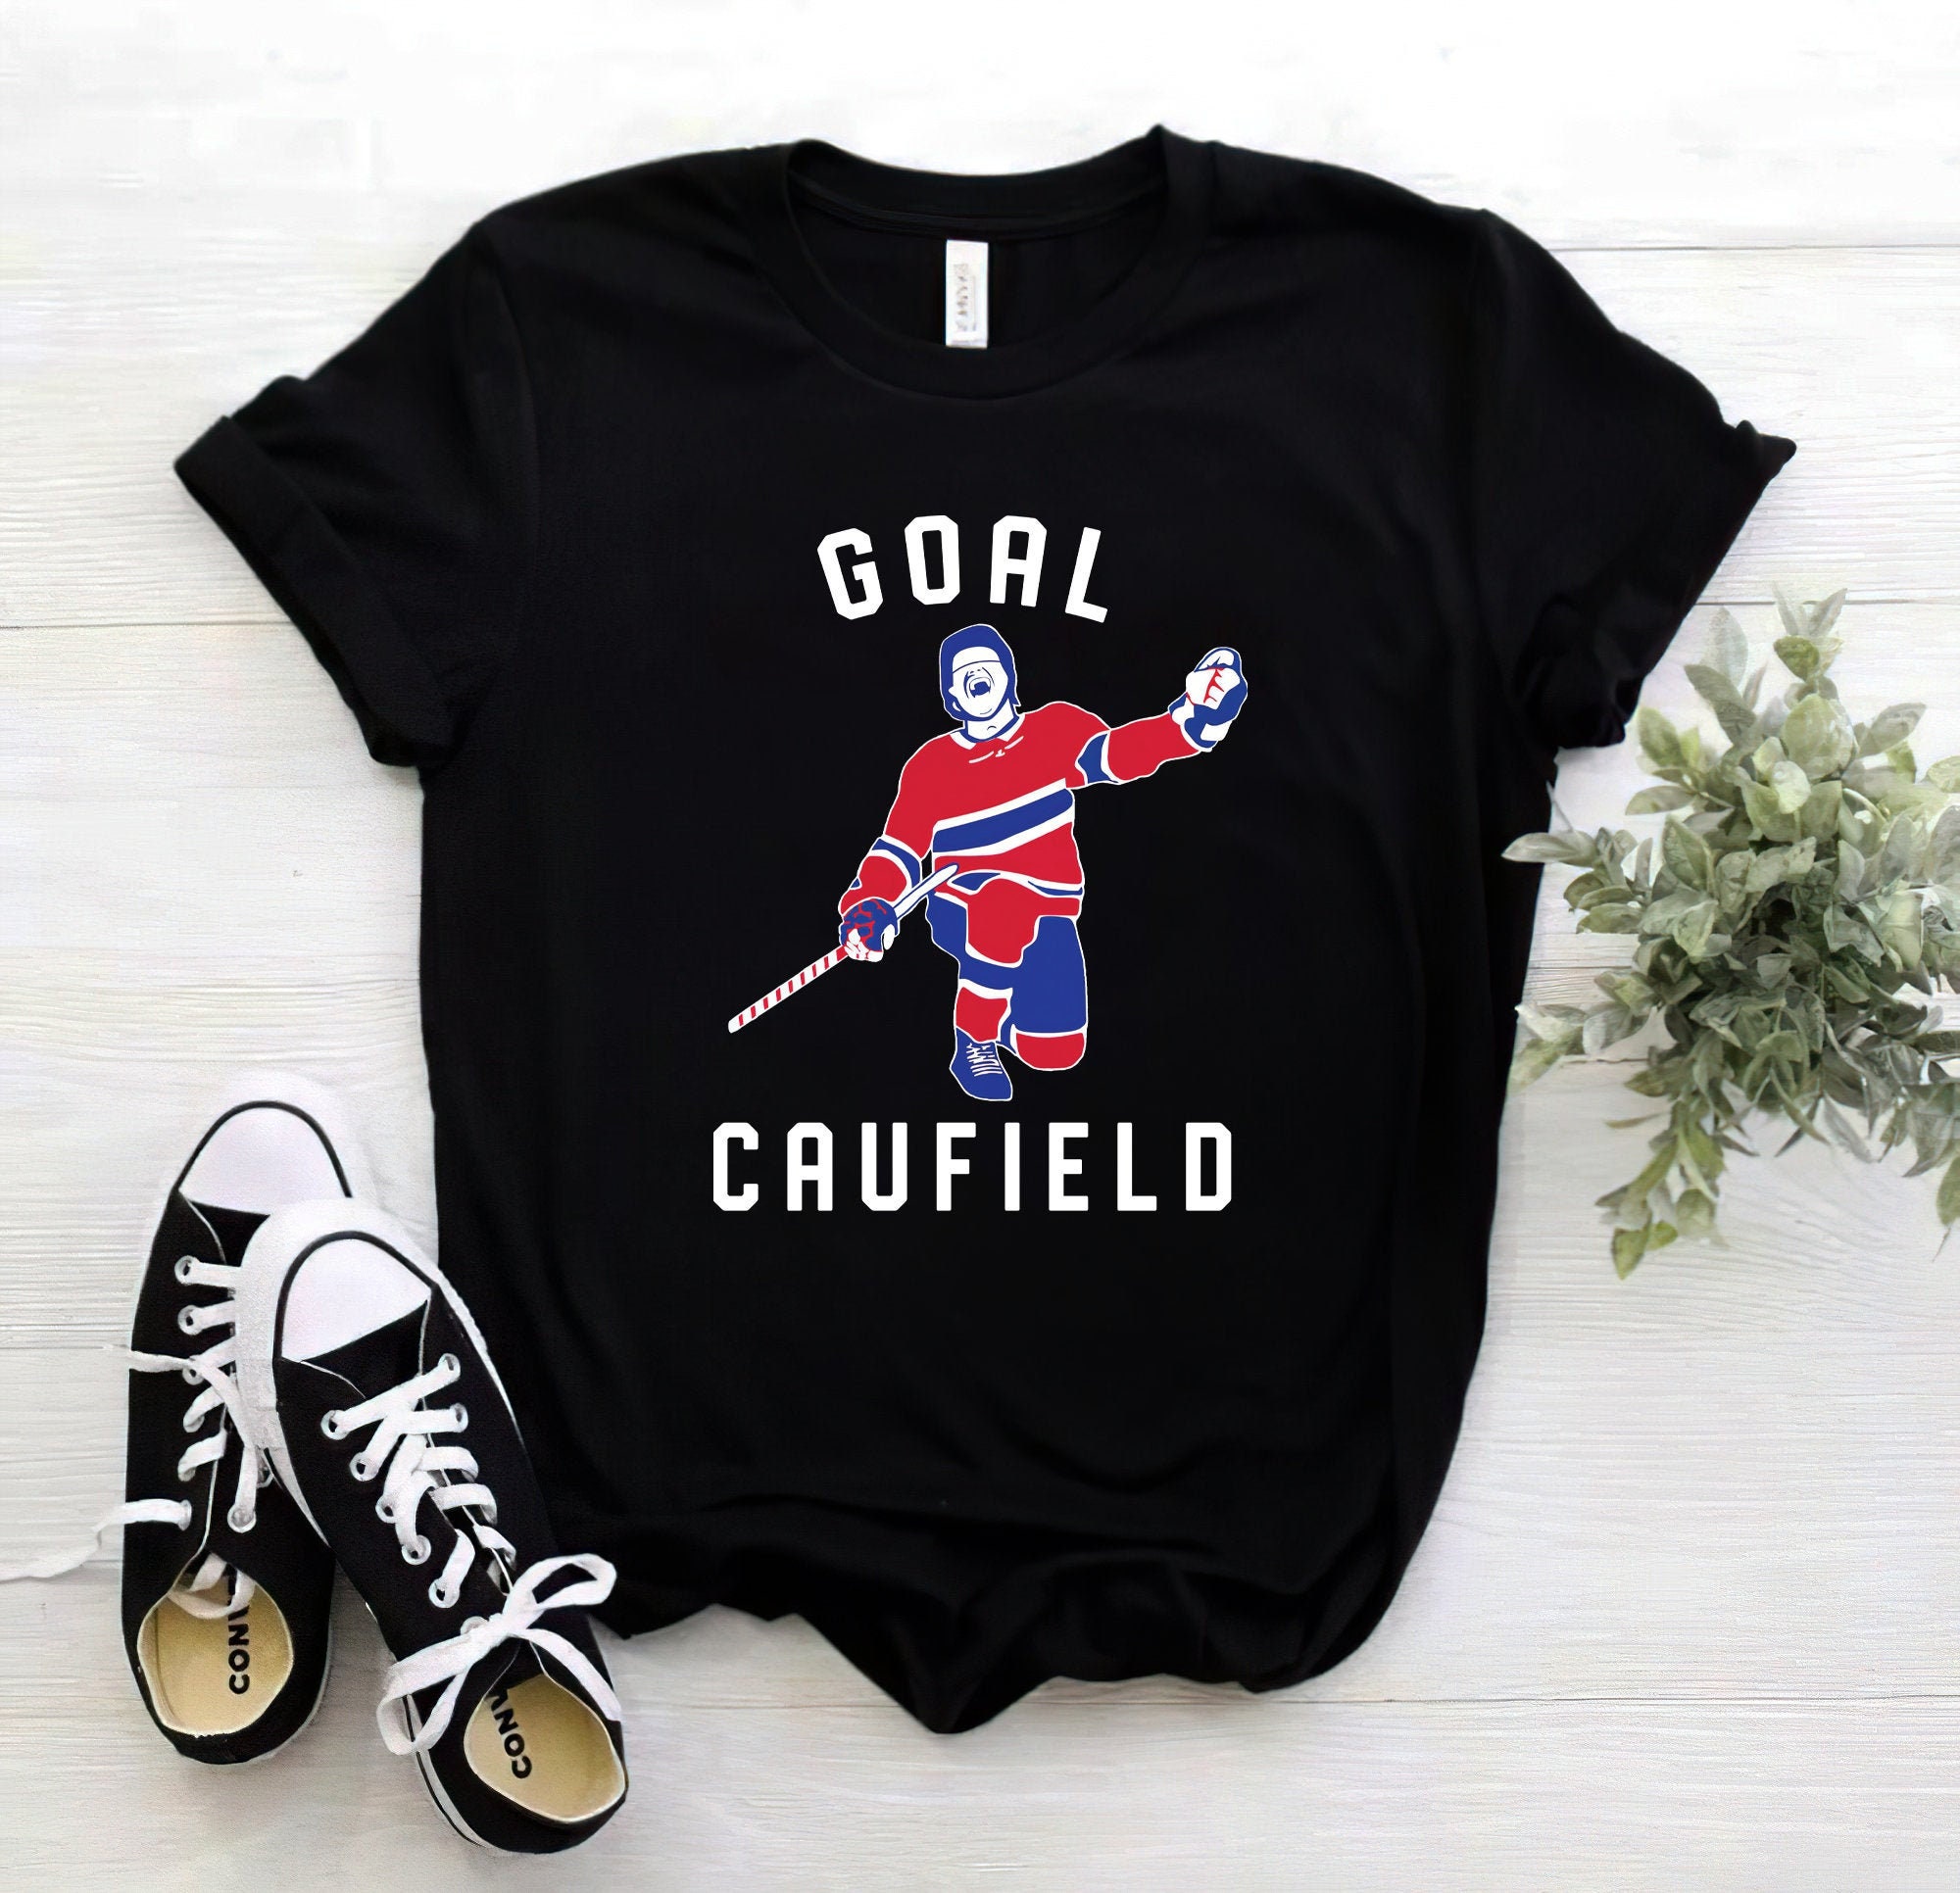 Goal Caufield T-Shirt Cole Caufield Shirt Montreal Canadiens | Etsy